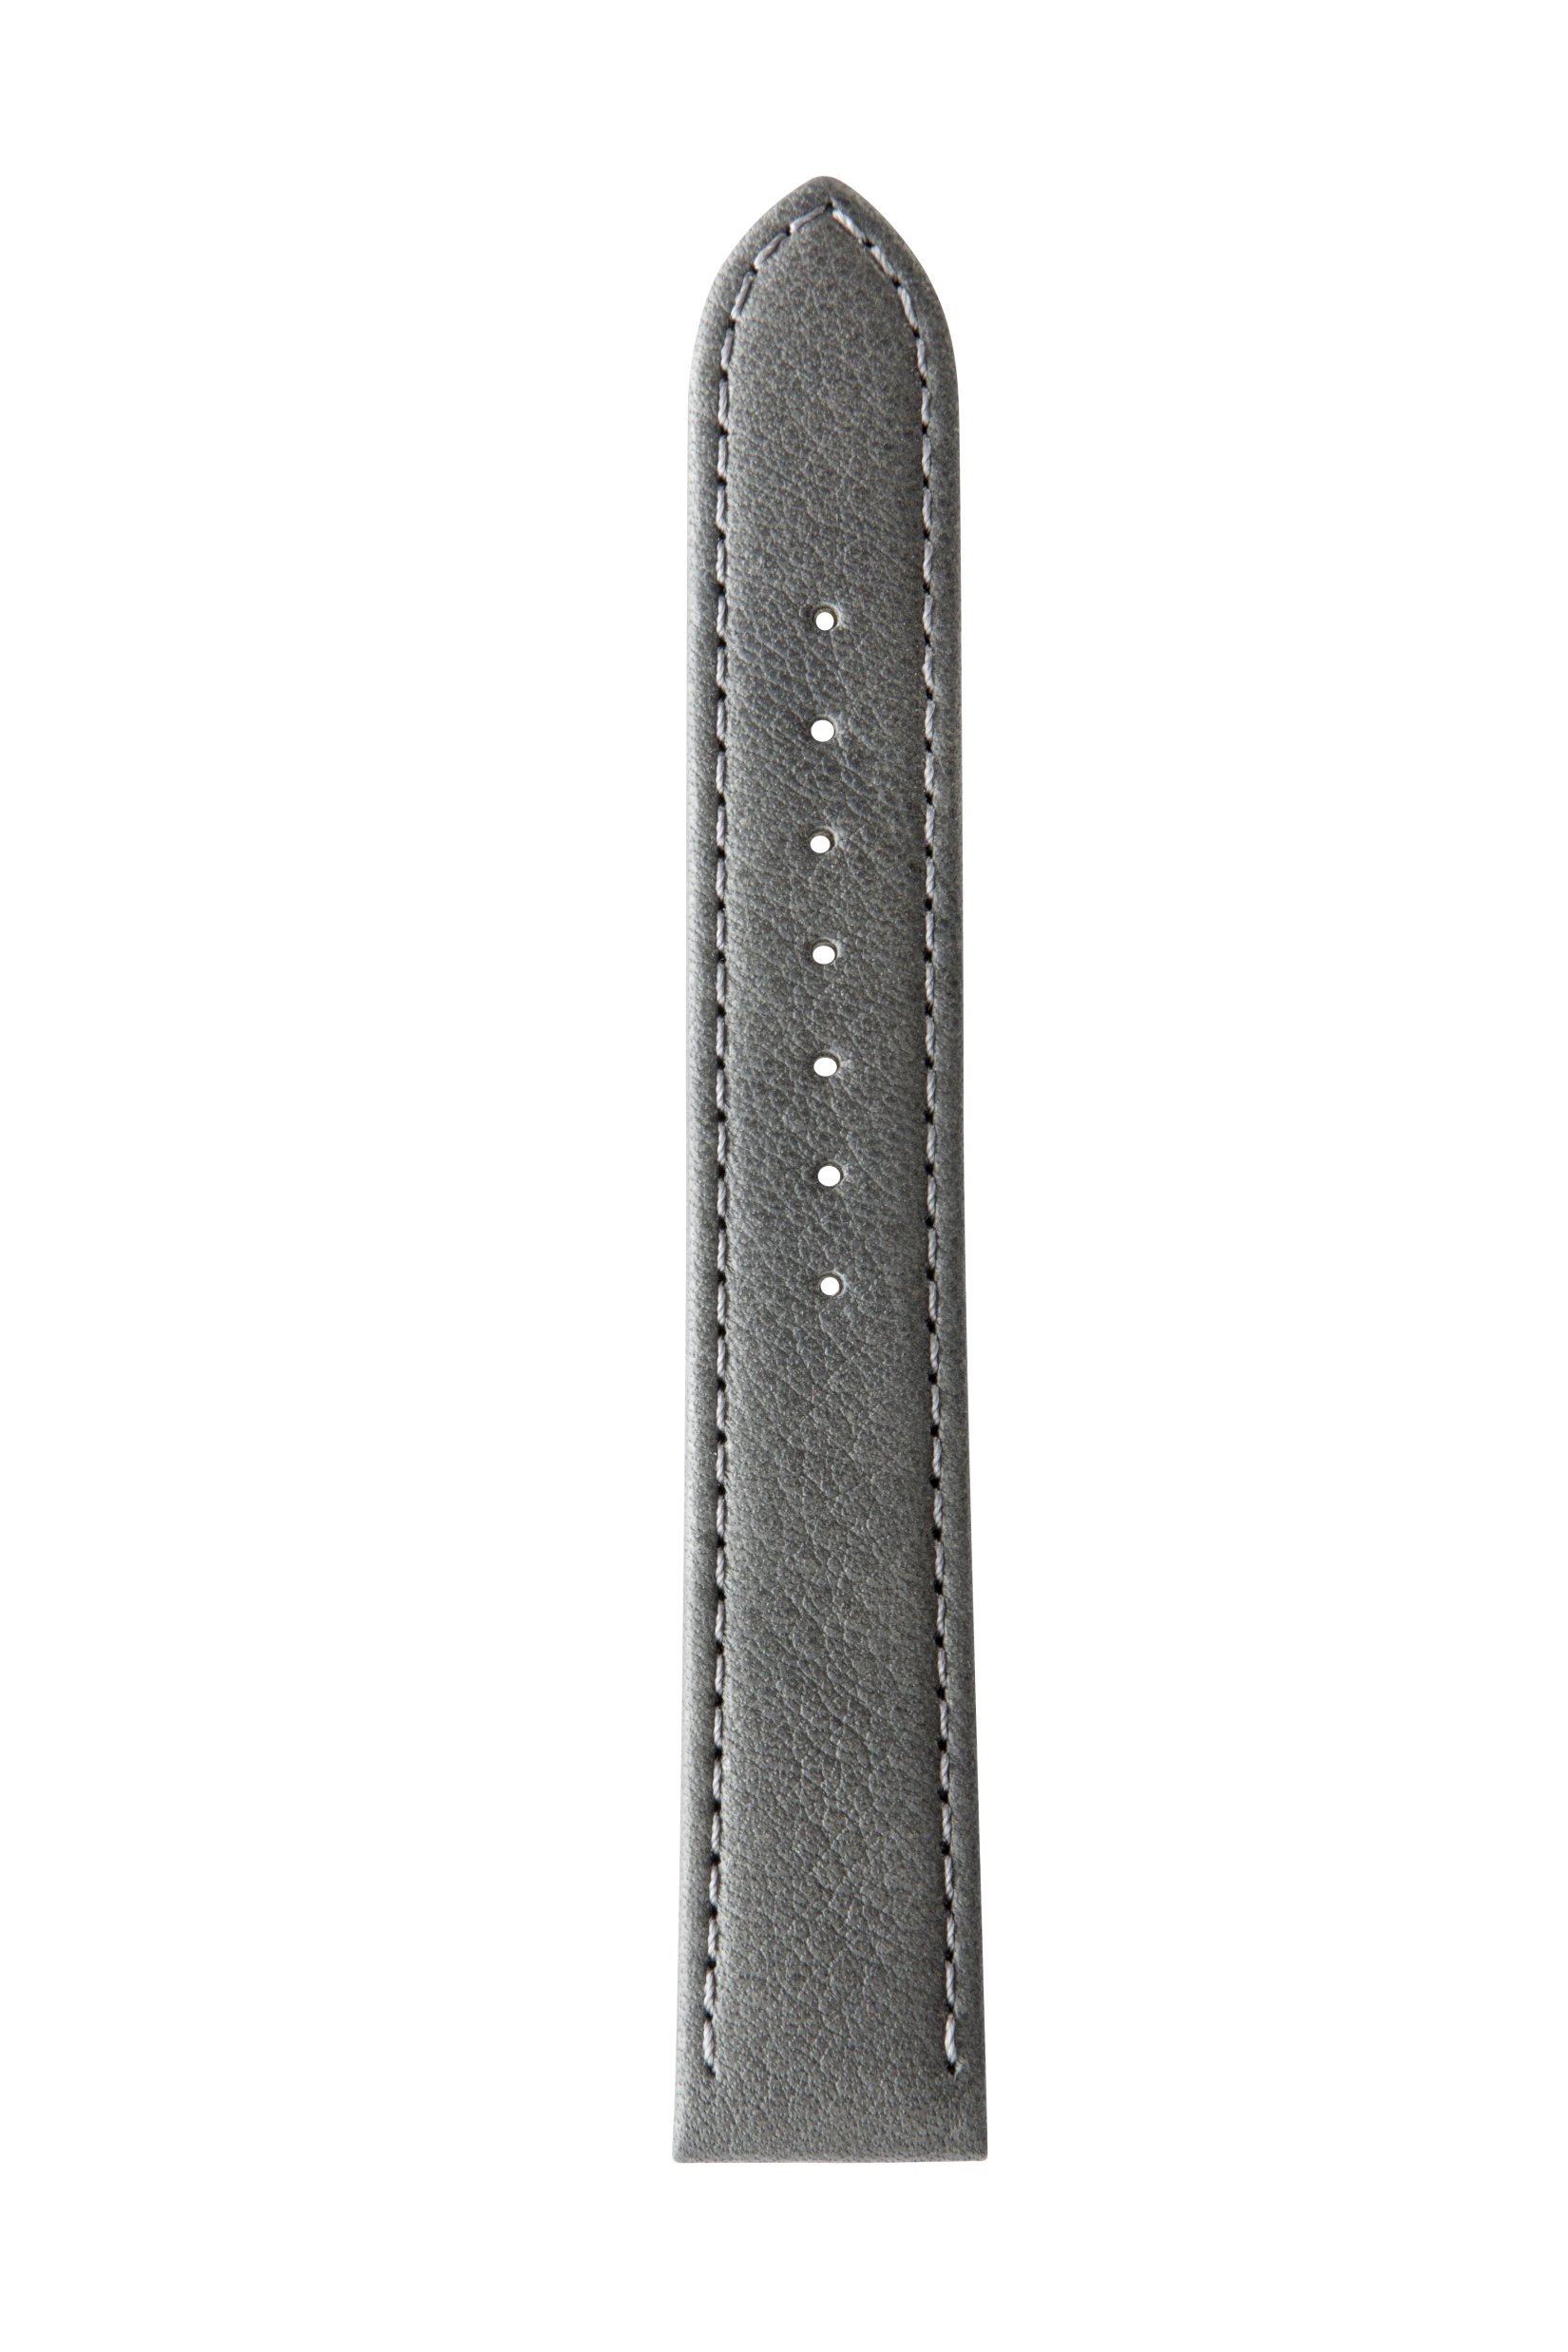 Lederband Softina 12mm dunkelgrau